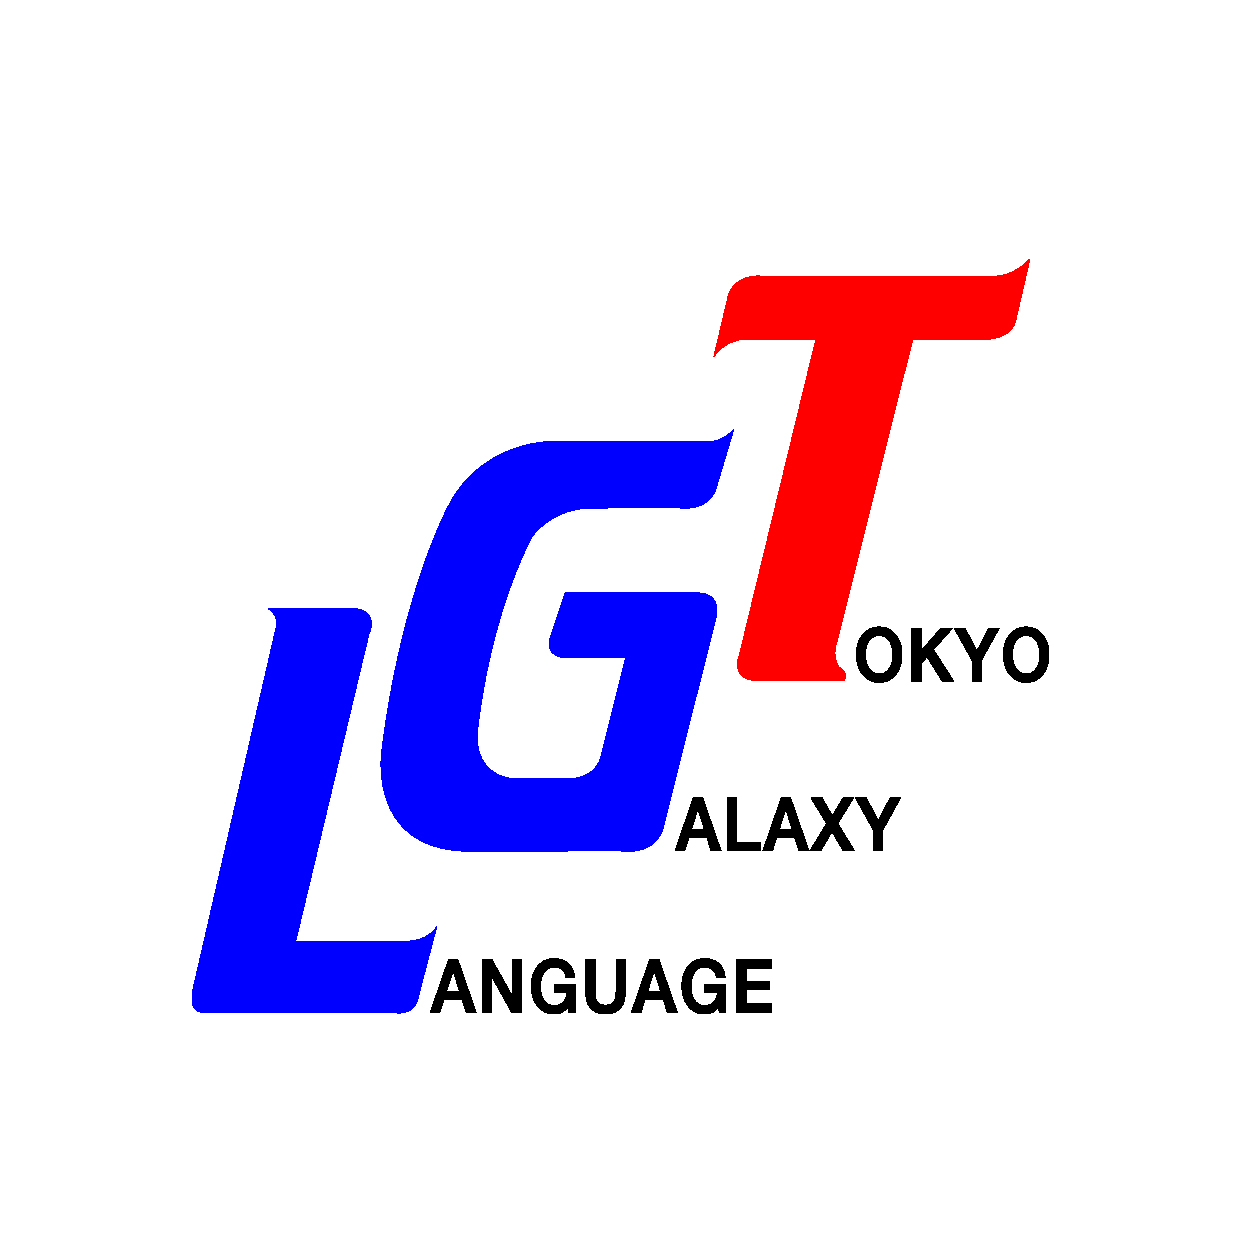 Tokyo Galaxy logo